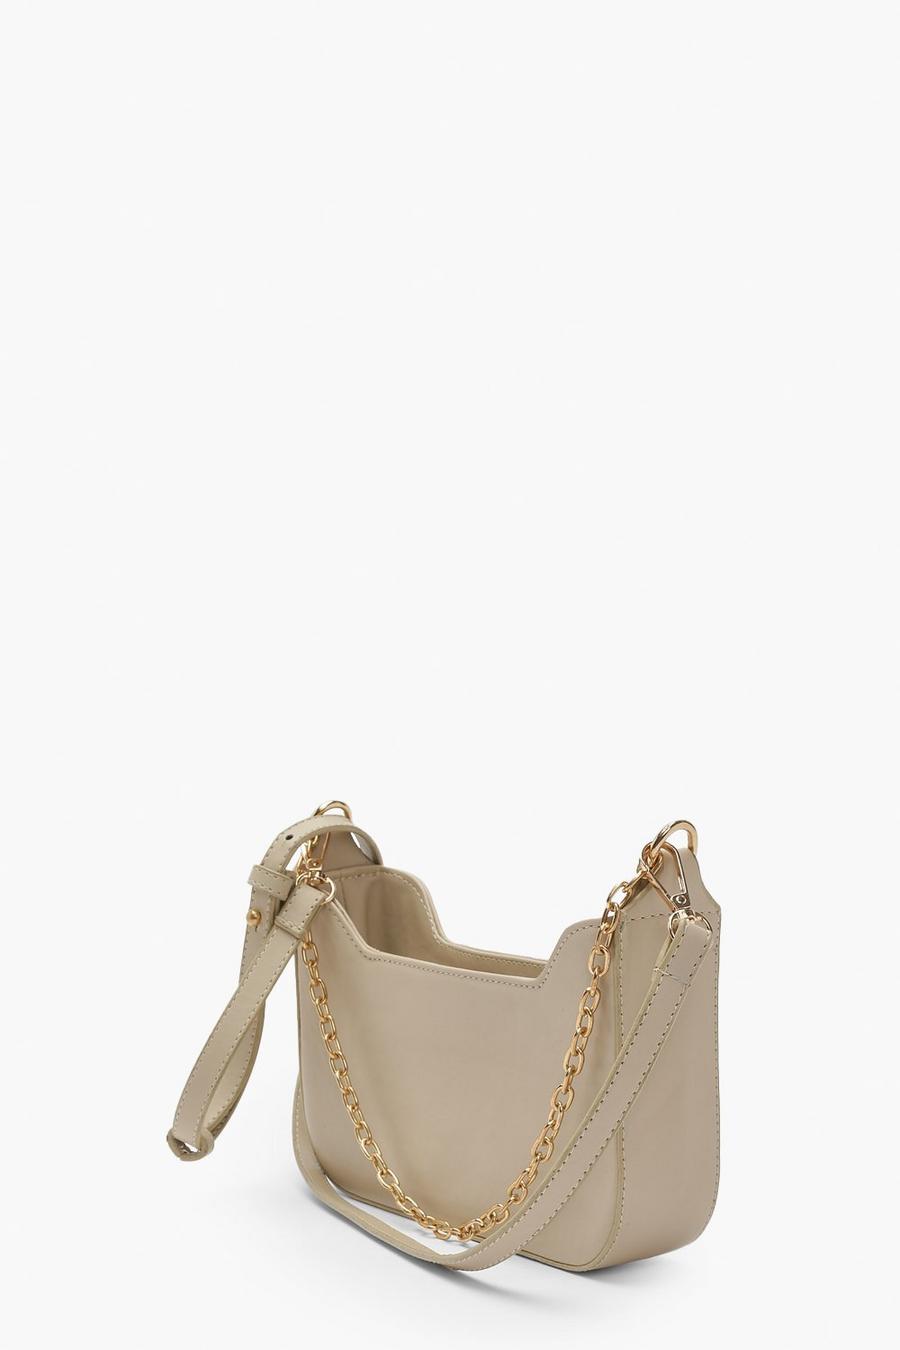 Cream vit Chain Shoulder Bag